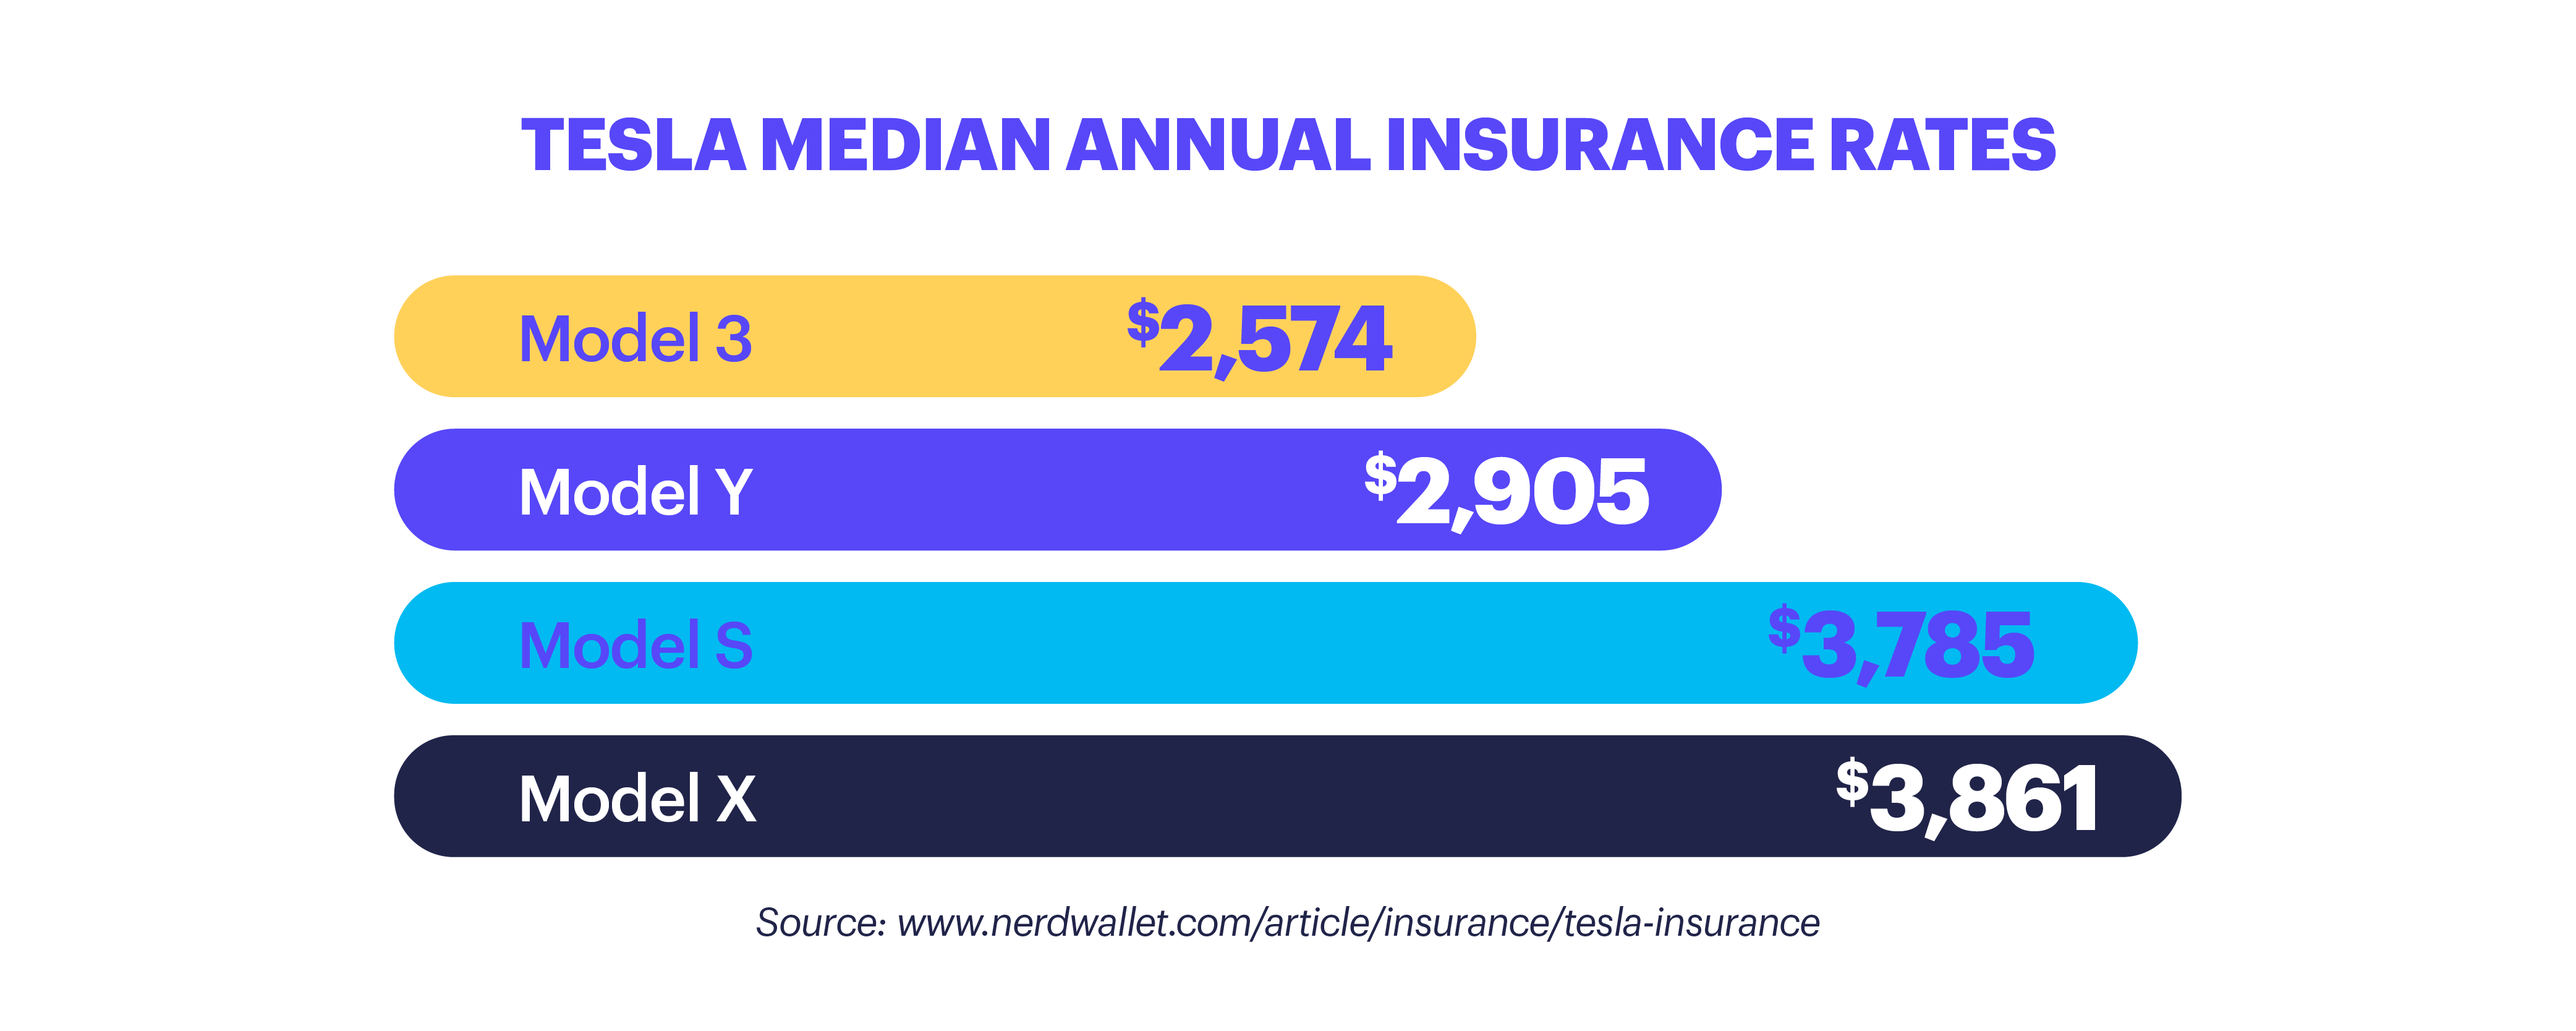 Tesla median annual insurance rates